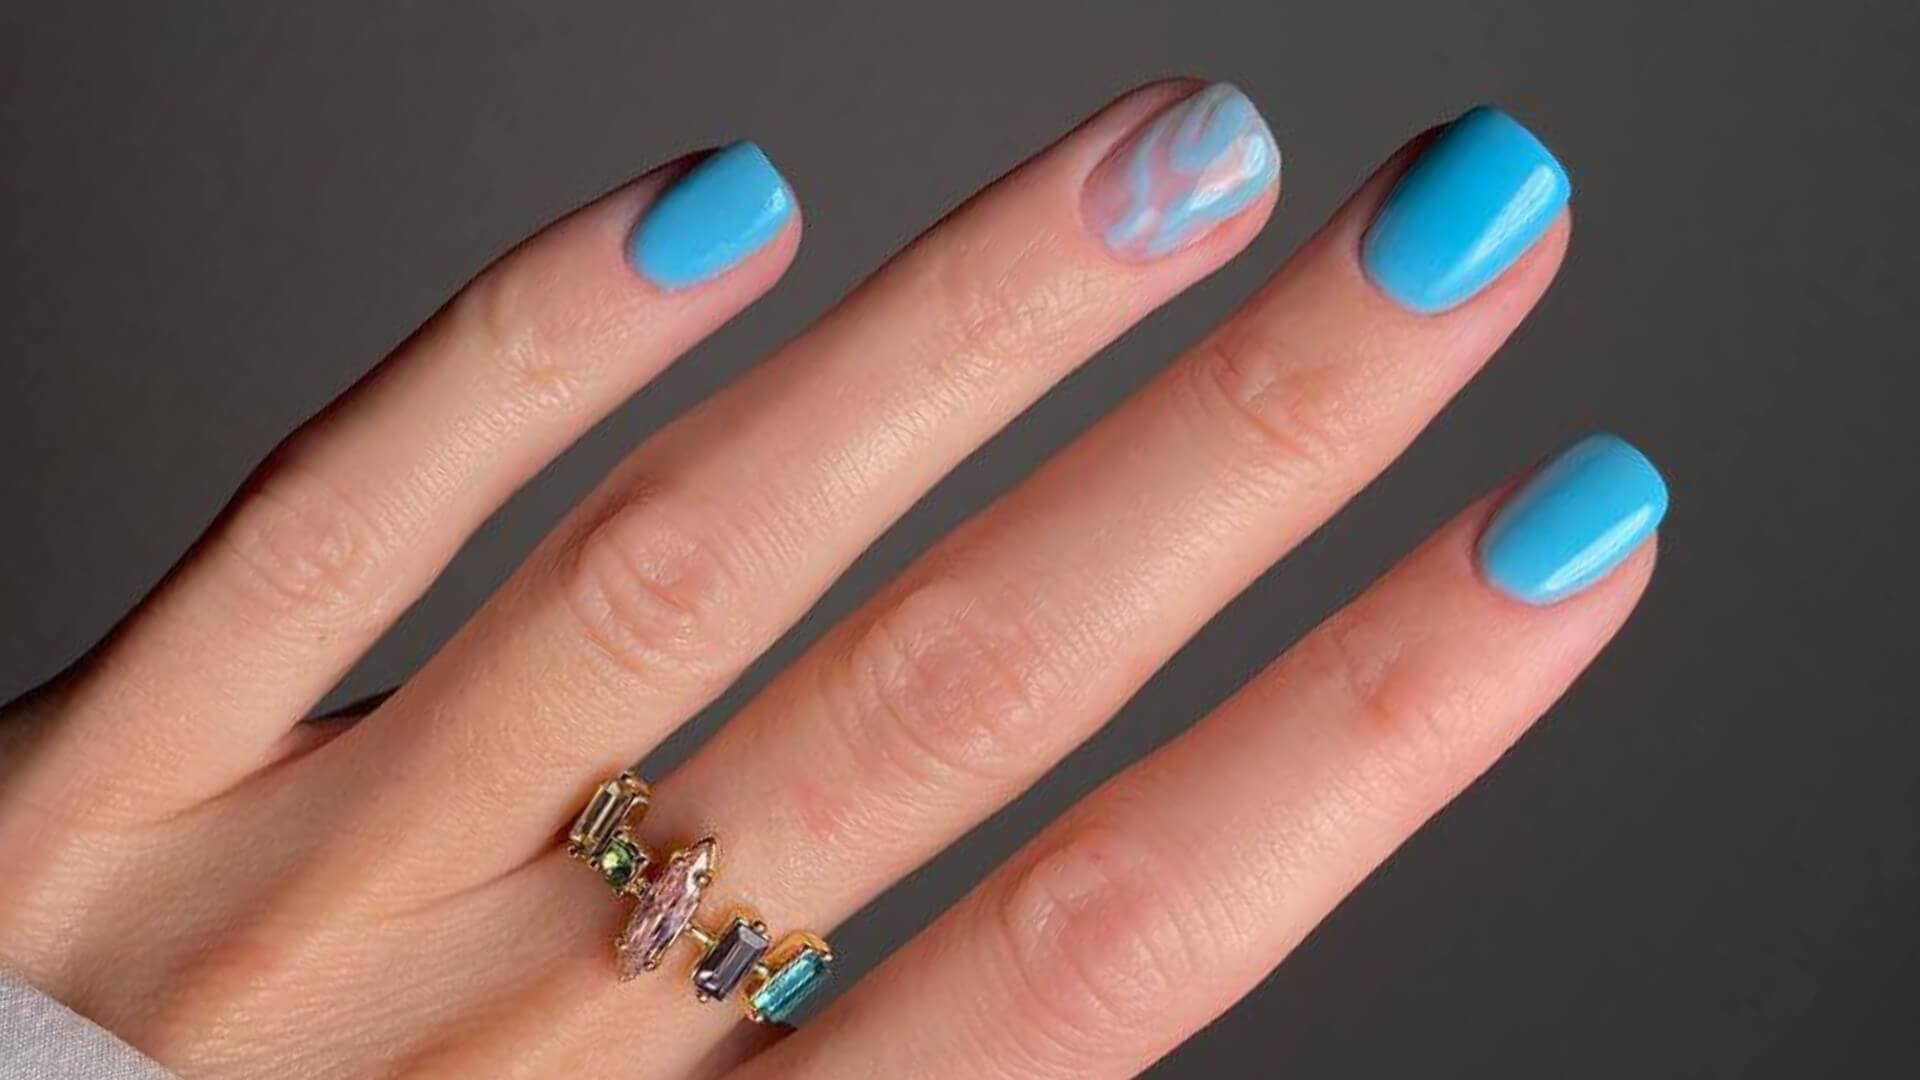 Natural Classy Short Acrylic Nails That Make Fingers Shine | Woman's World